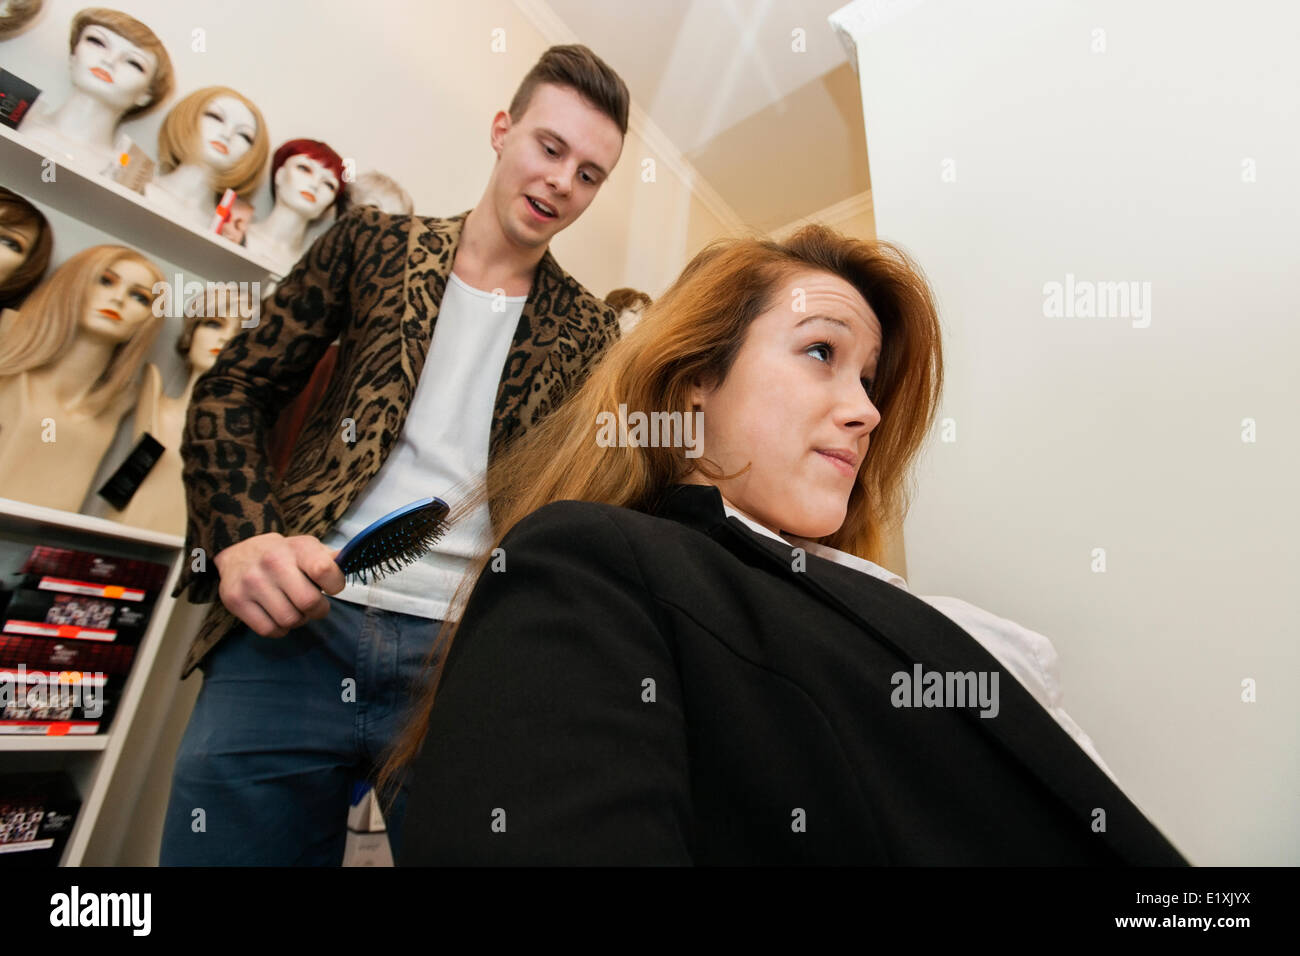 Male hairstylist brushing female customer's hair in salon Stock Photo